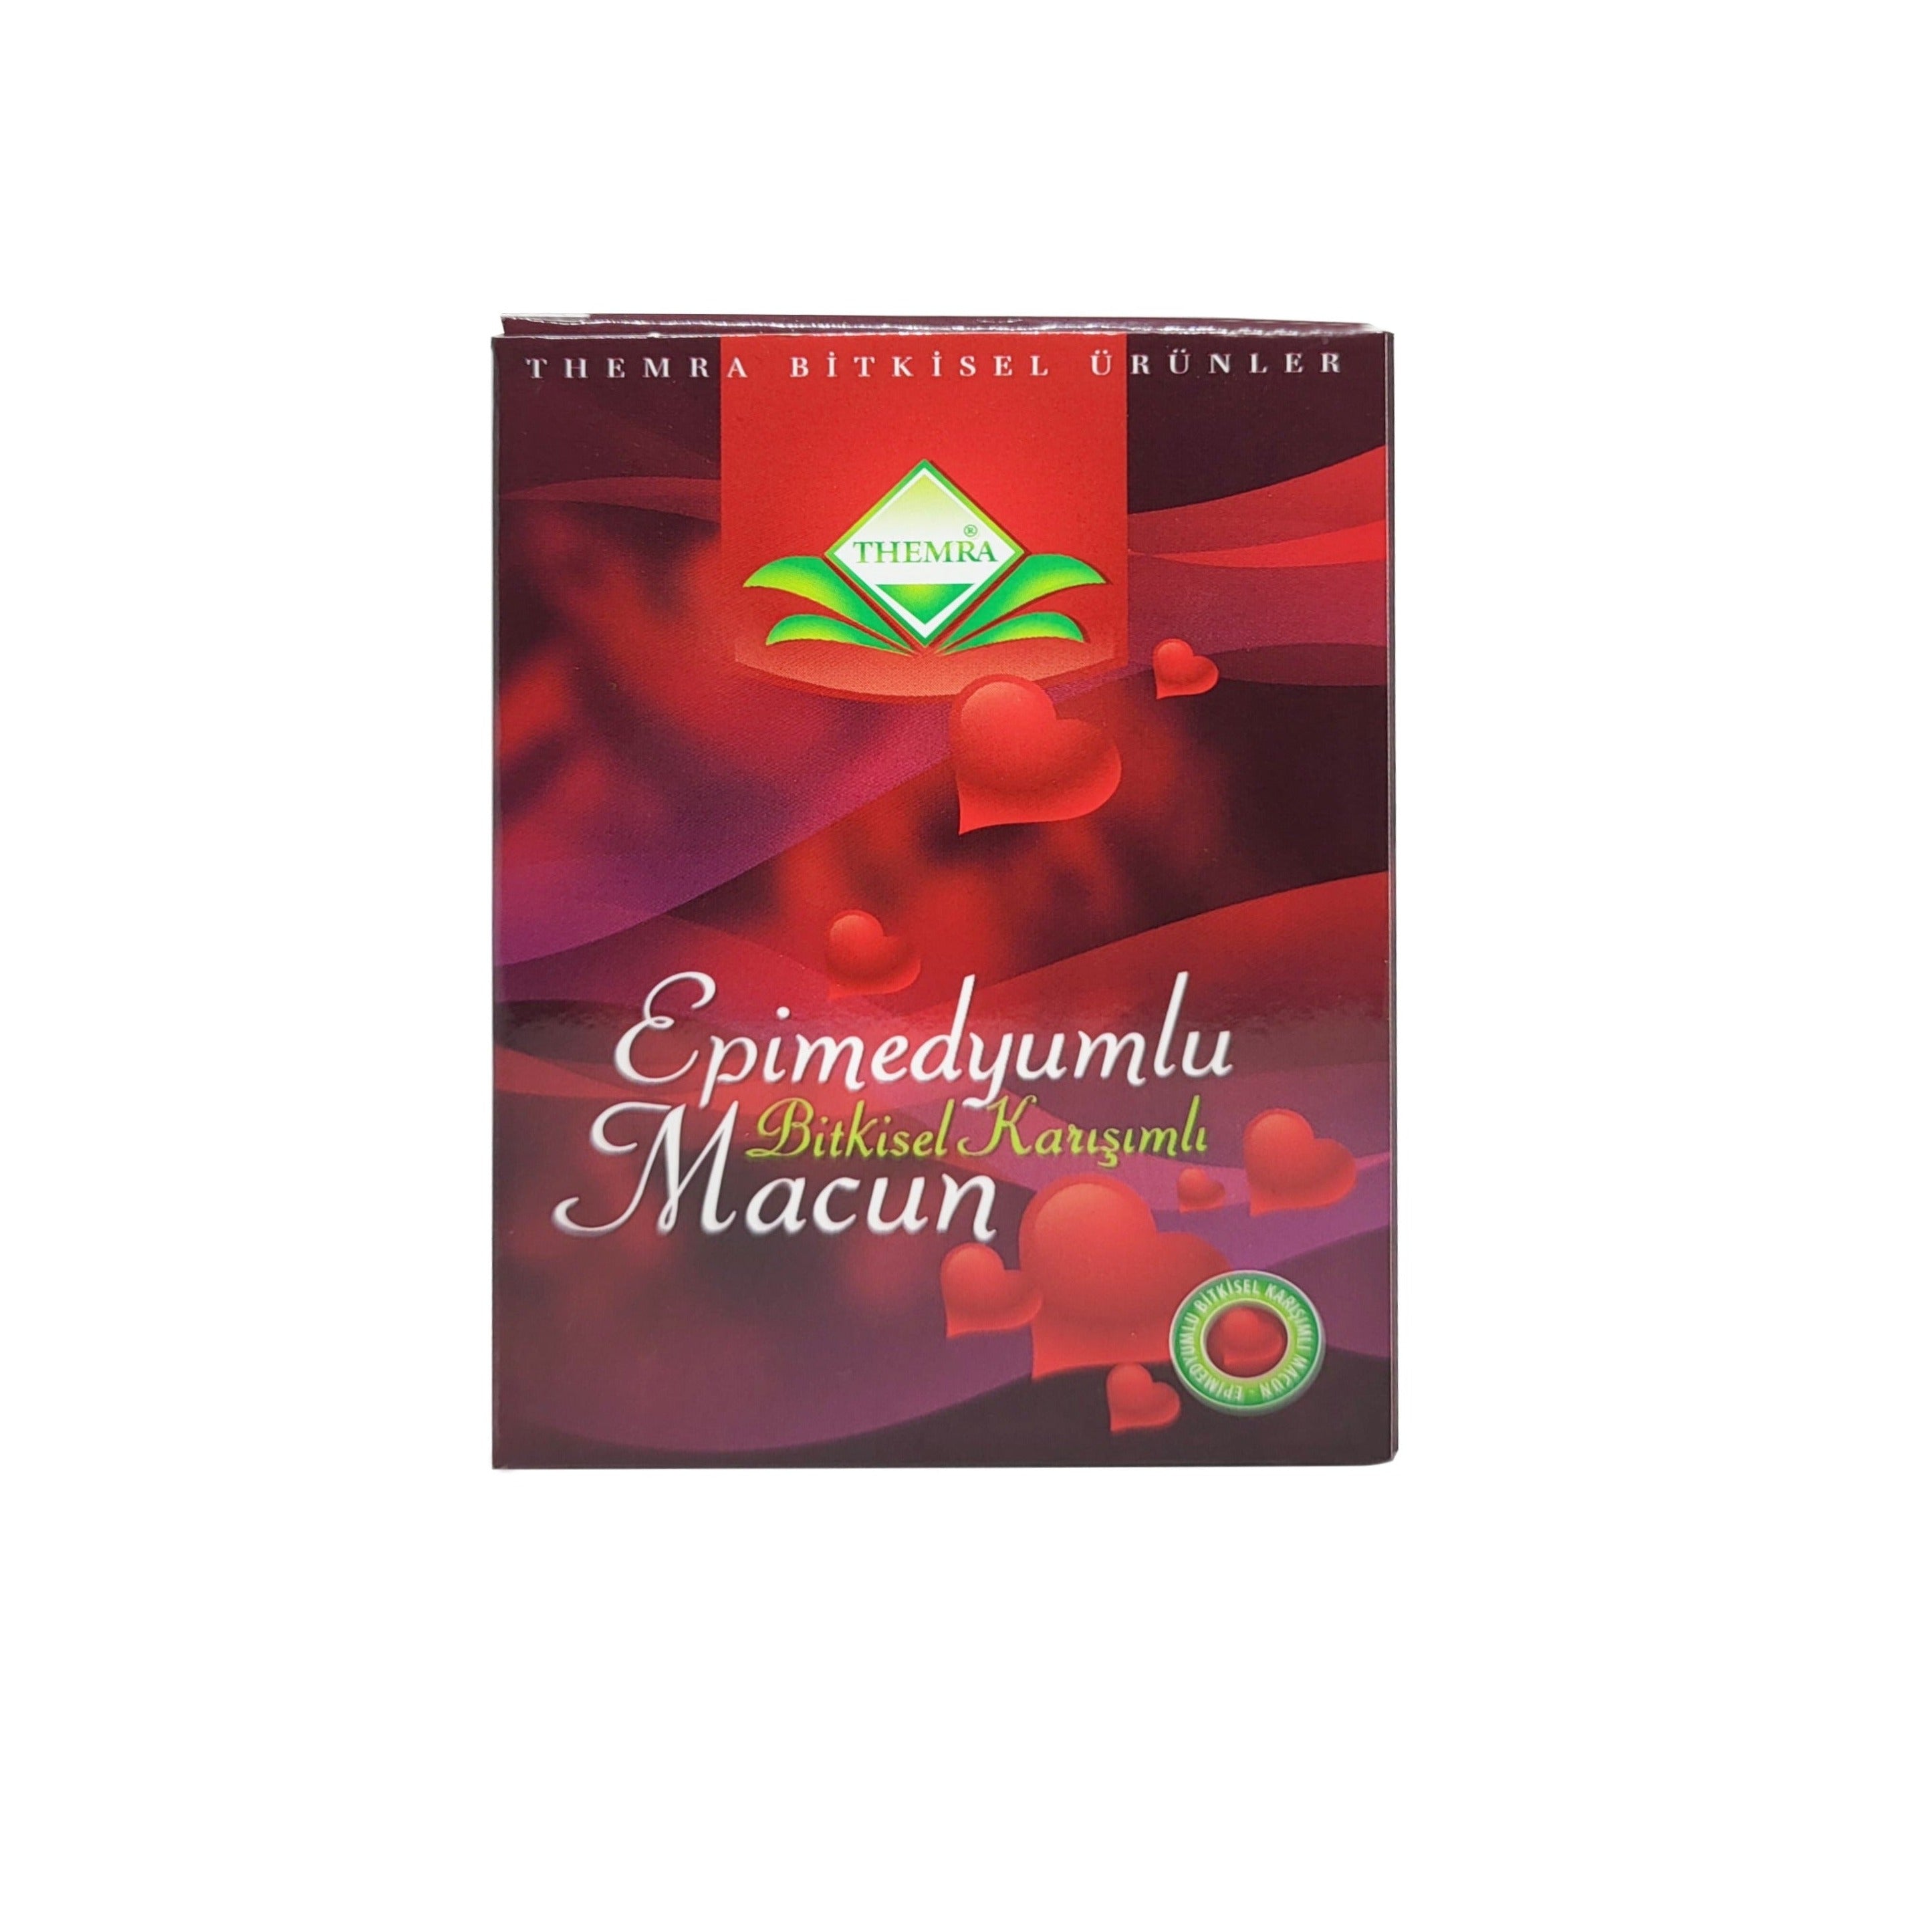 Epimedium Macun Price in Pakistan Online brand +92 305 5997199, by  telemart